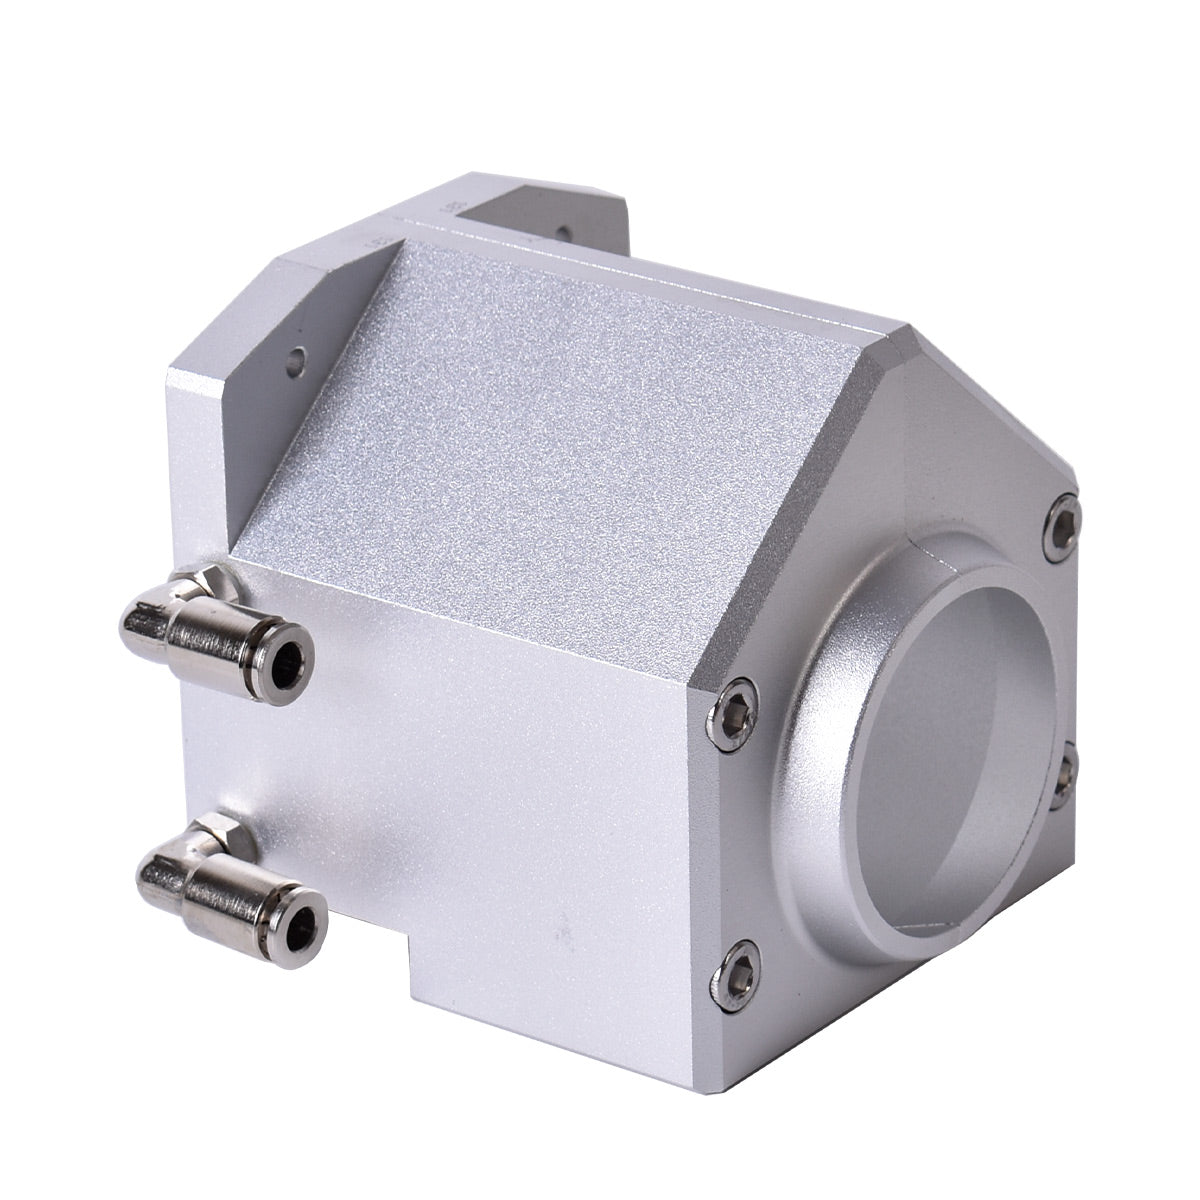 Startnow Precitec Procutter F200 Metal Cooling Device Laser Cutting Head Water Cooling Module